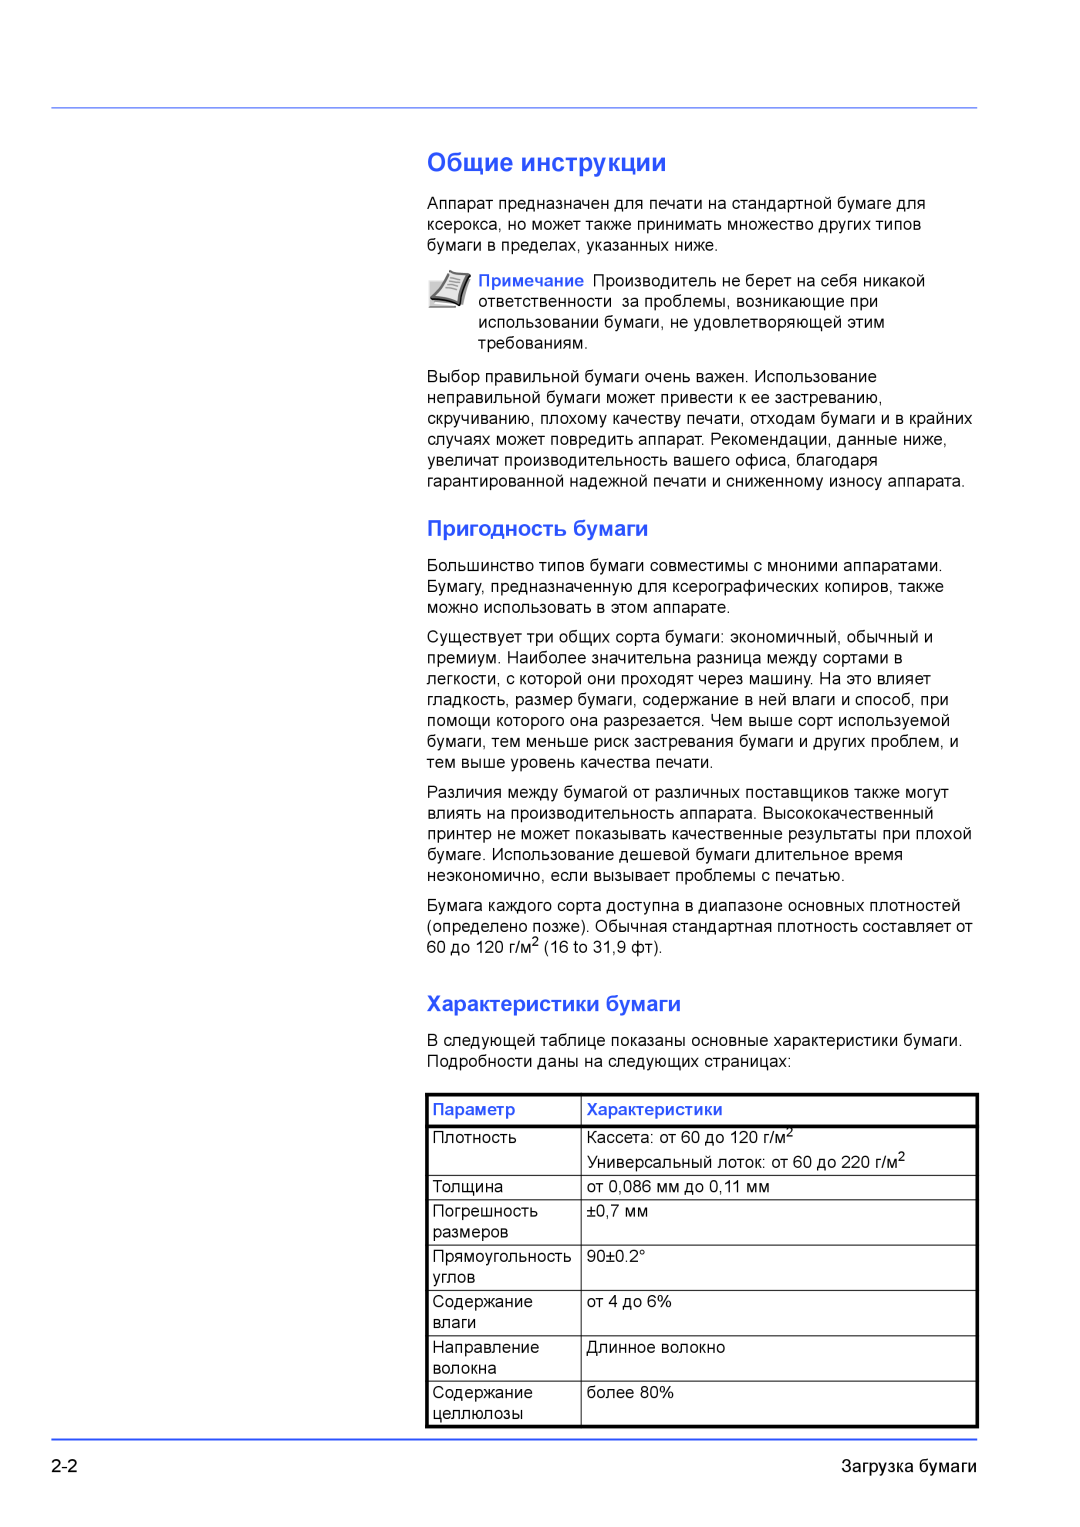 Kyocera FS-1300D, FS-1100 manual Общие инструкции, Пригодность бумаги, Характеристики бумаги, Параметр 